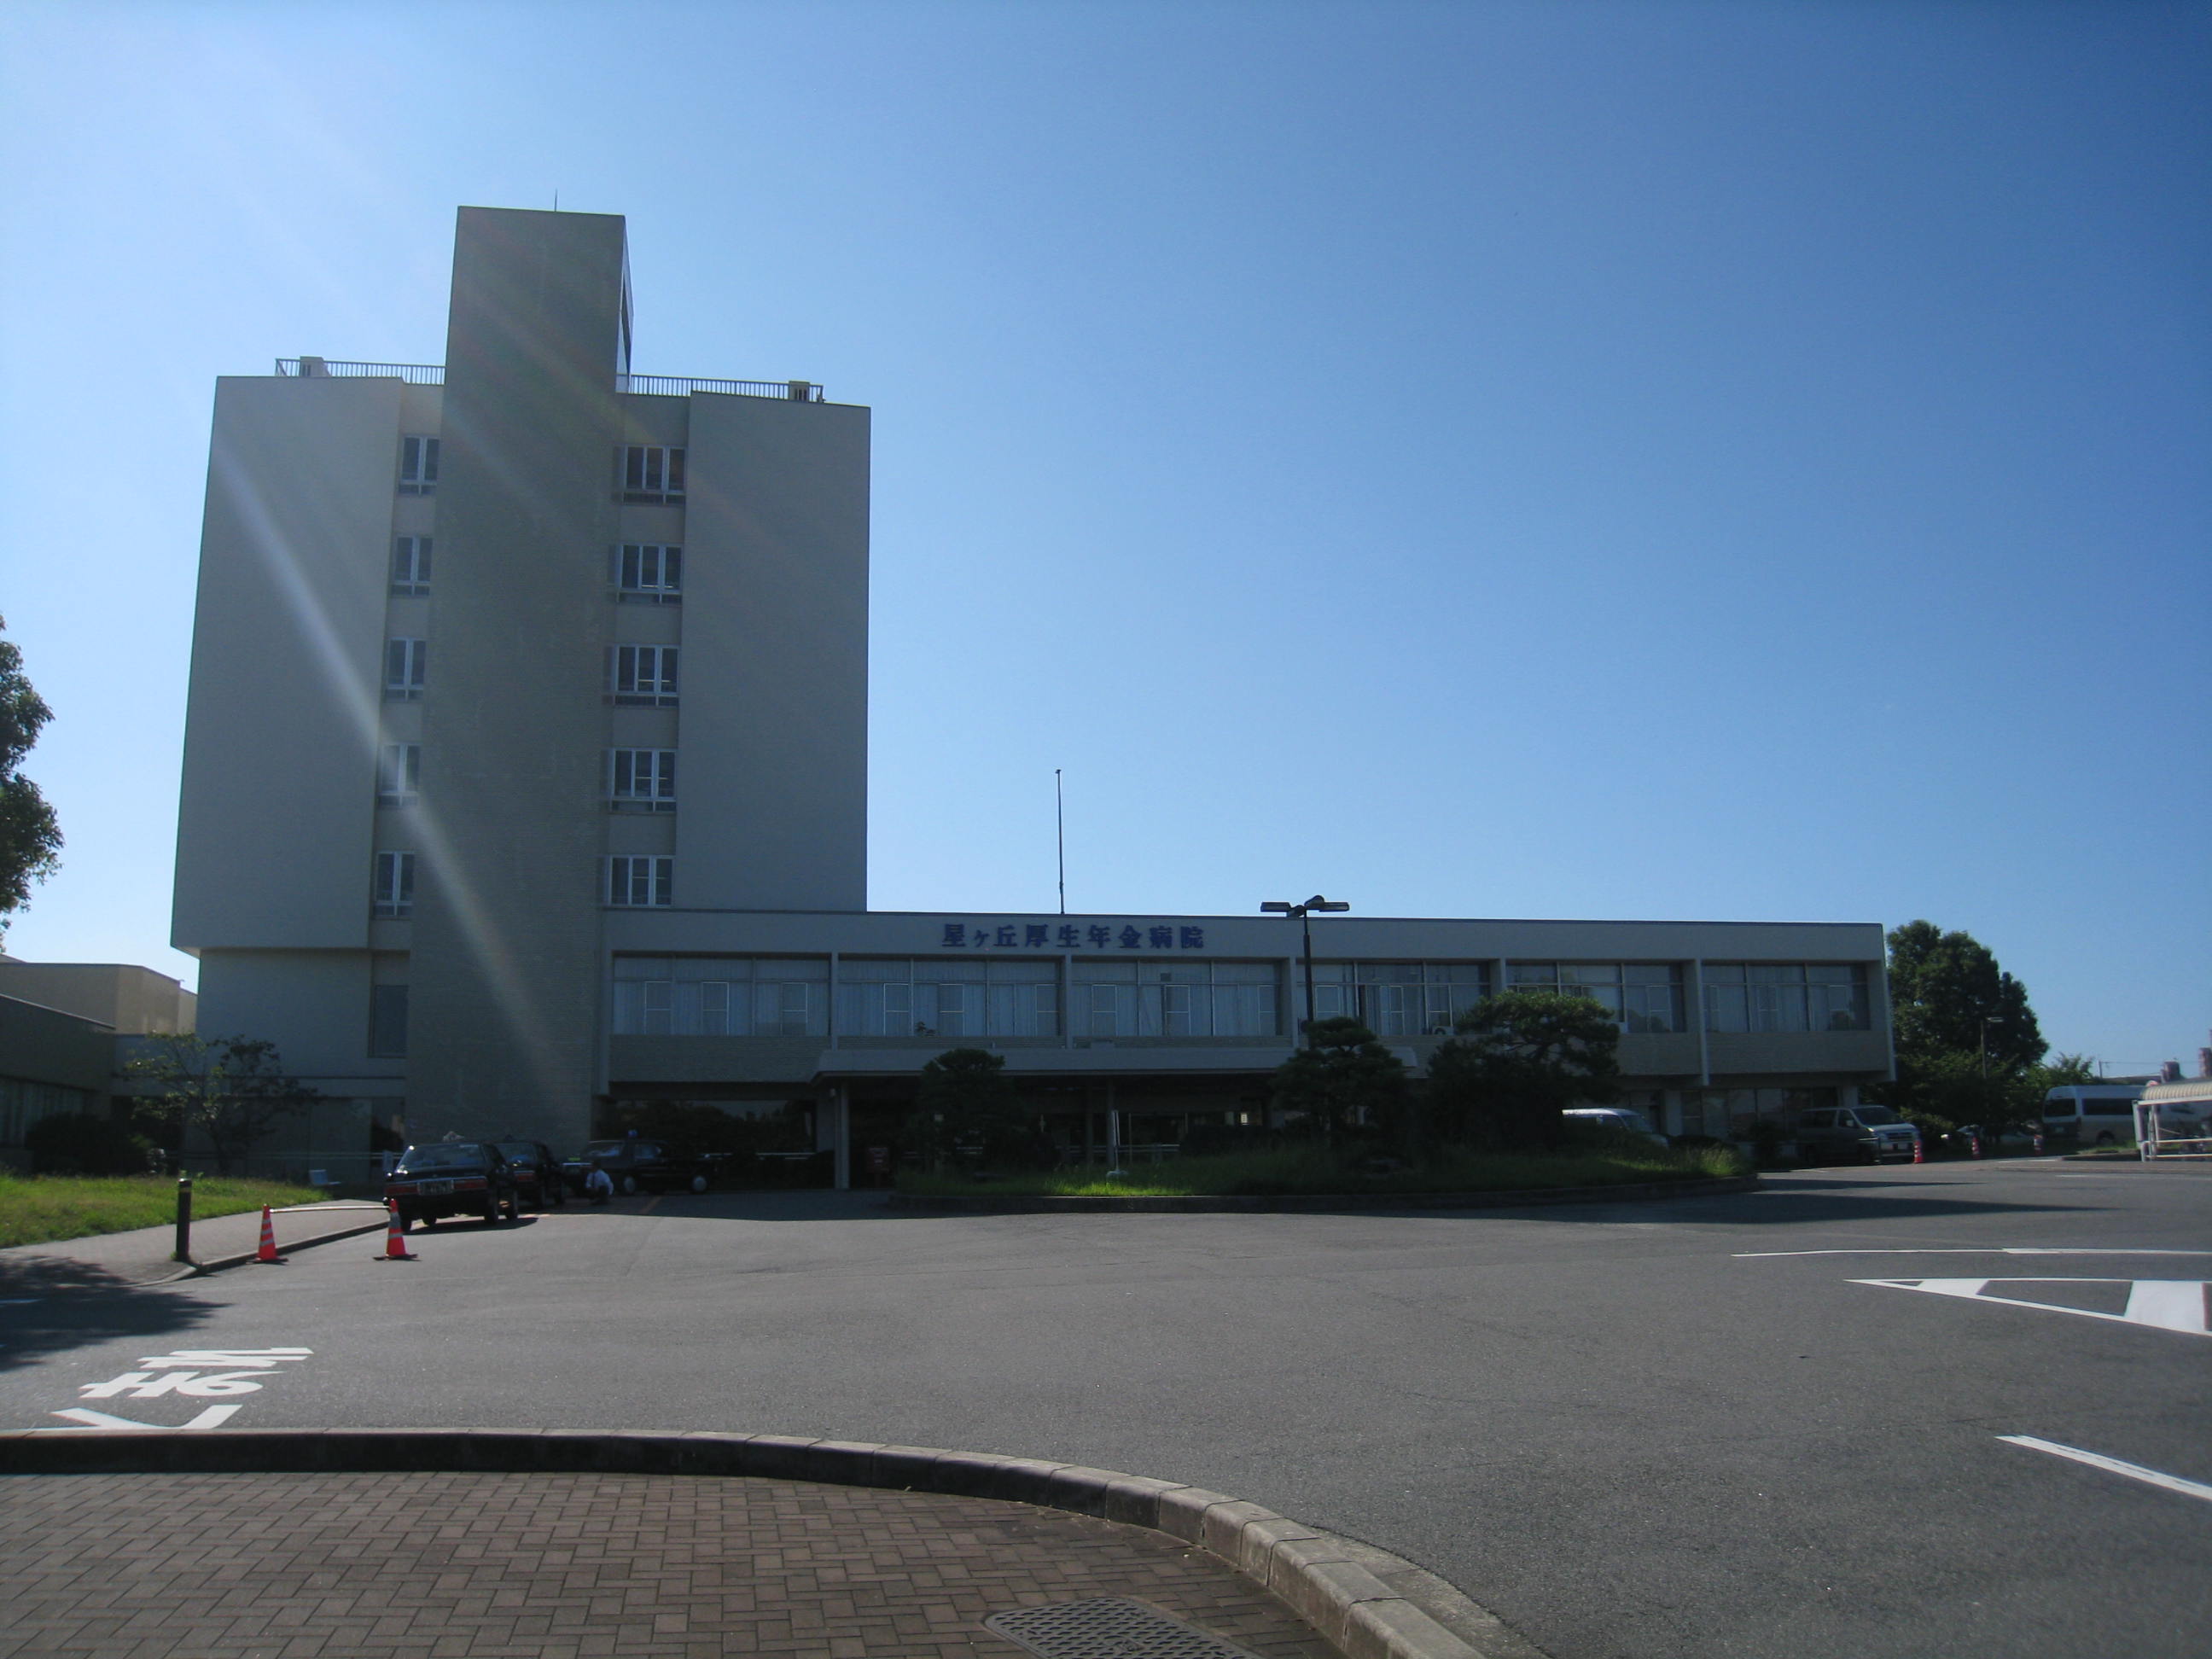 Hospital. The Institute of National Social Insurance Association Hoshigaoka 905m to employees' pension Hospital (Hospital)